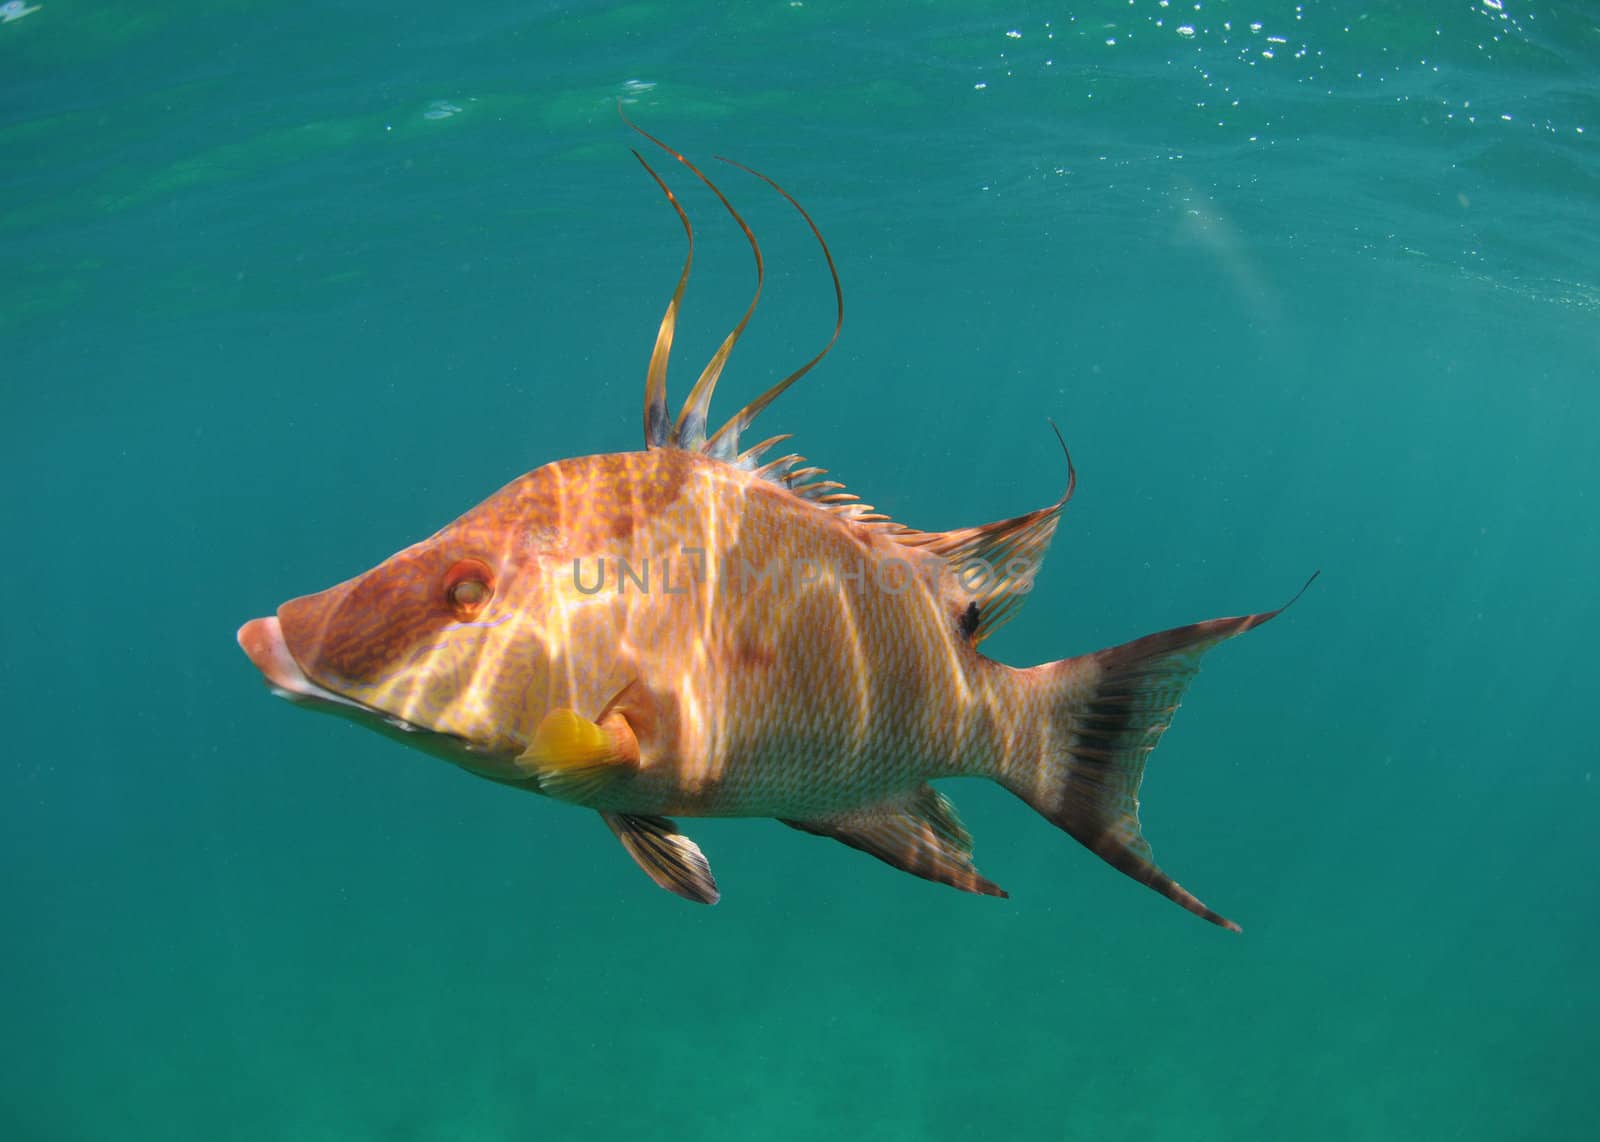 Hogfish swimming underwater off the coast of the Atlantic Ocean